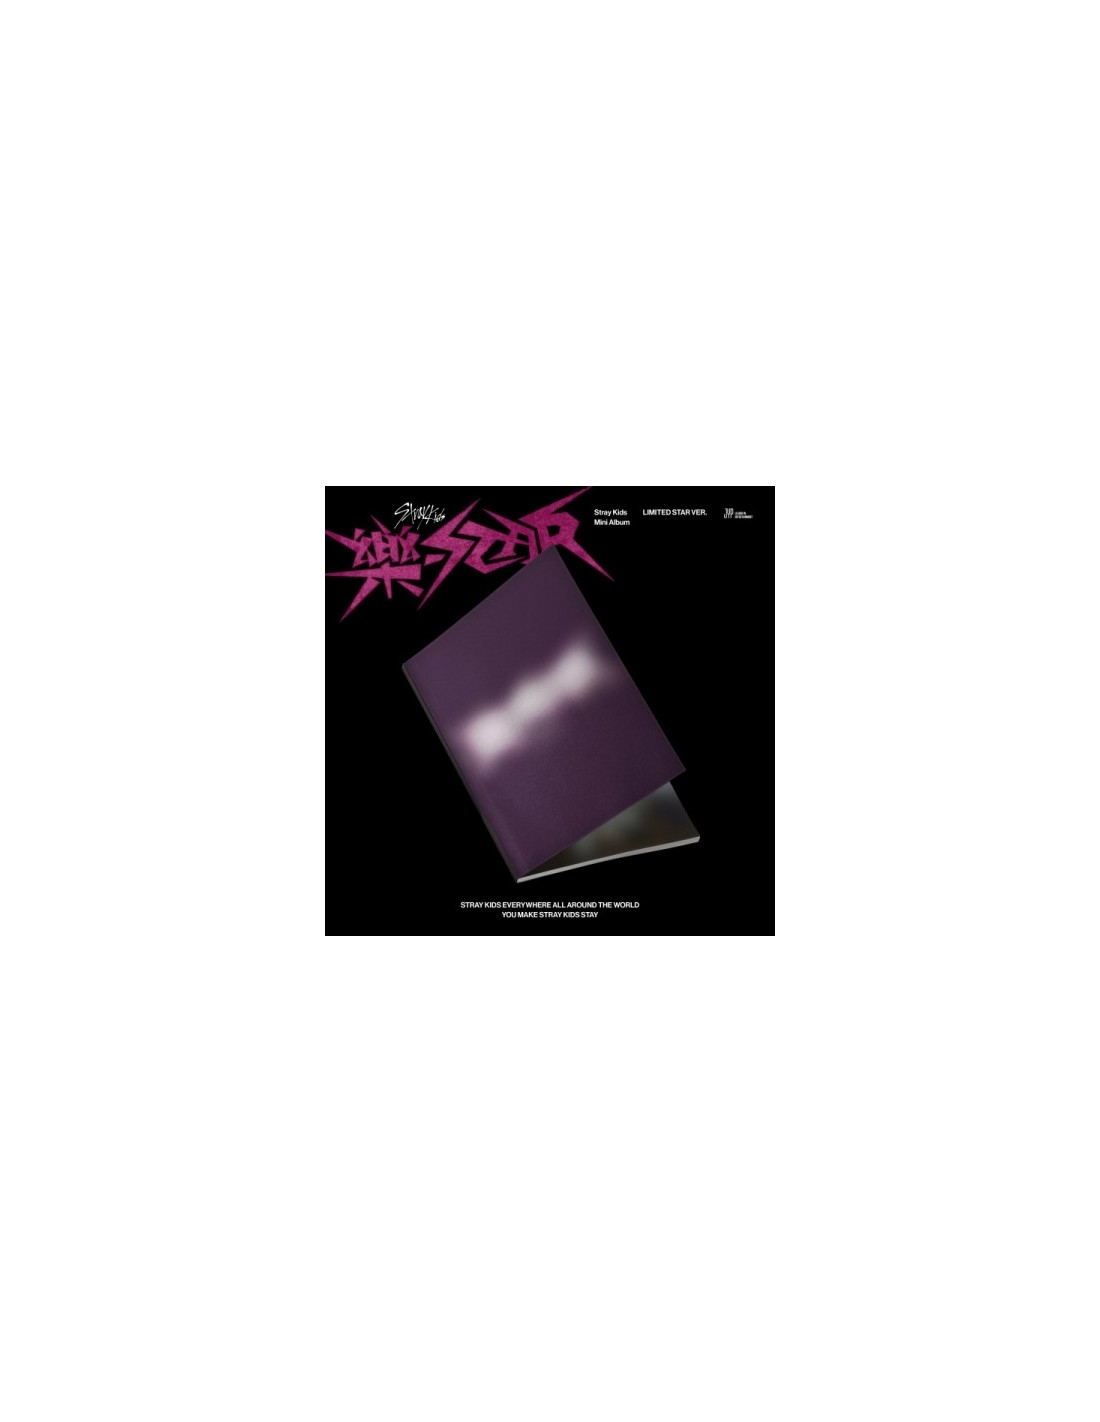 Stray Kids ROCK-STAR (Limited Star Ver.) CD